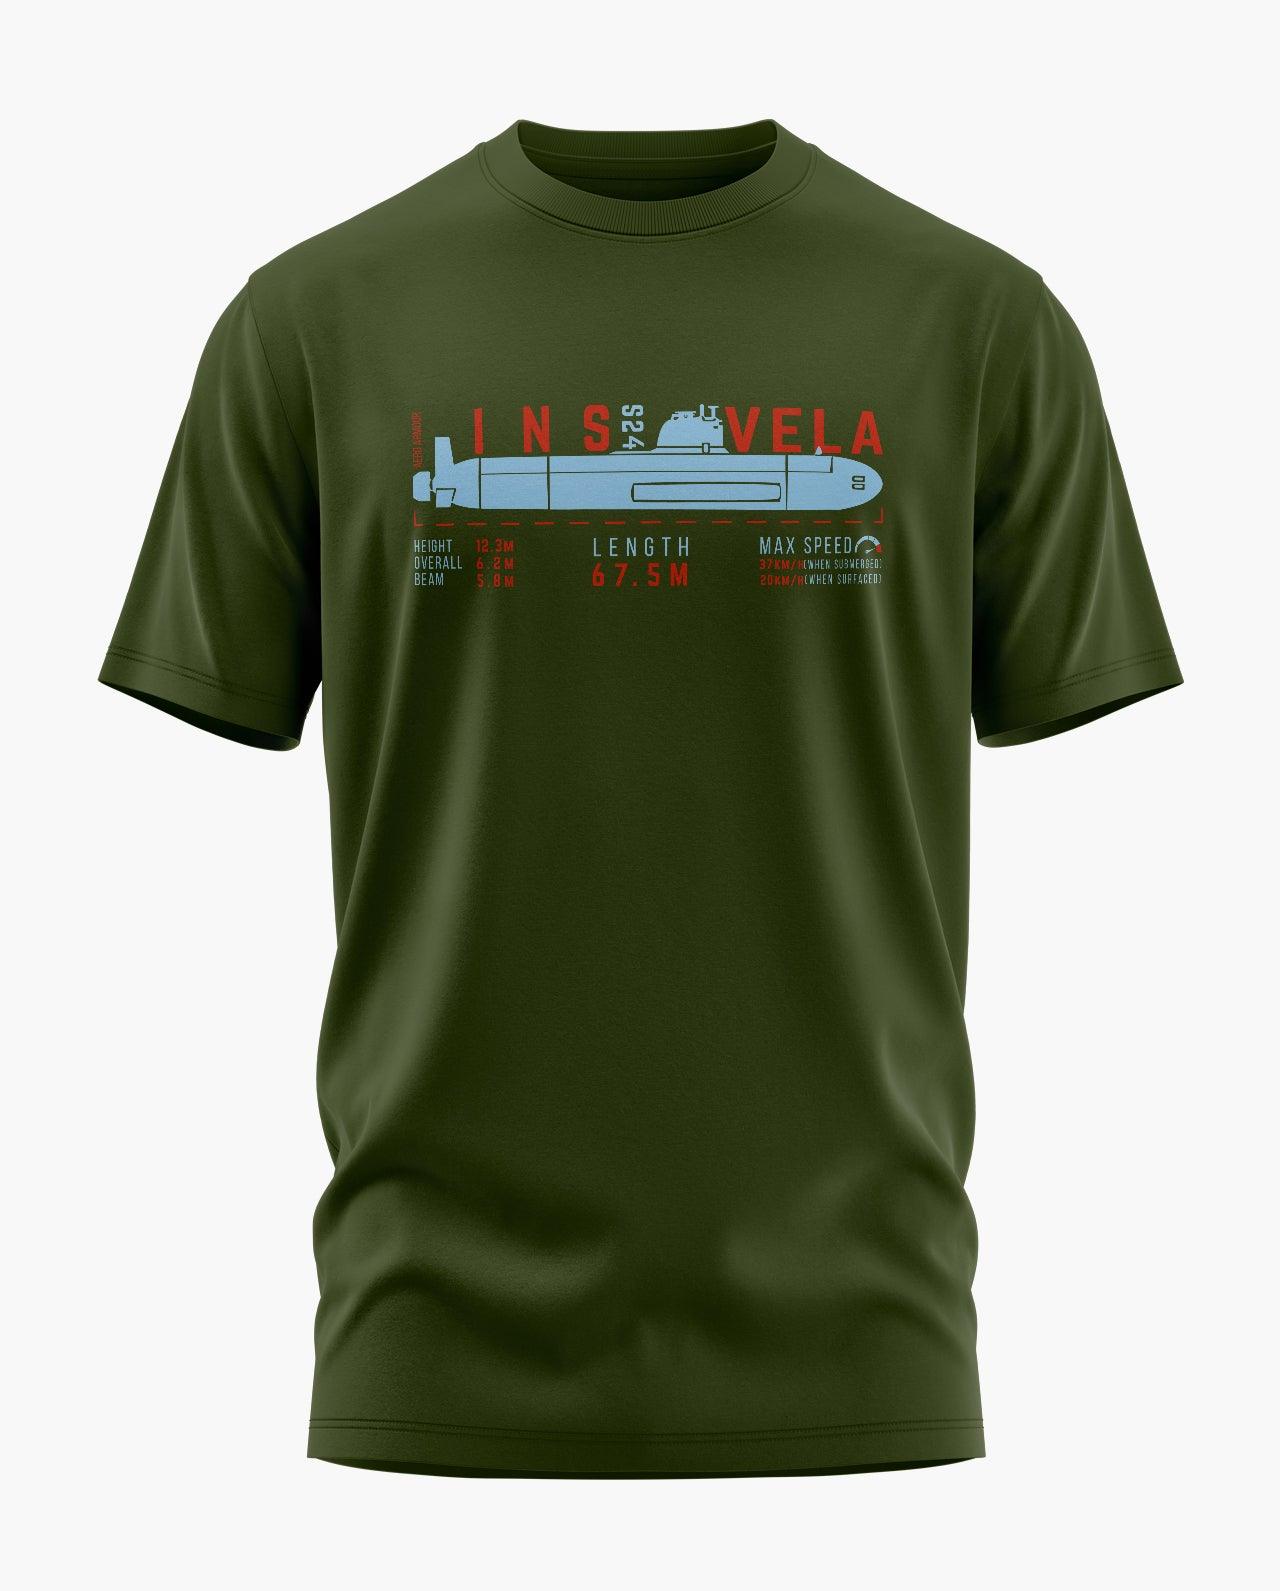 INS Vela T-Shirt - Aero Armour